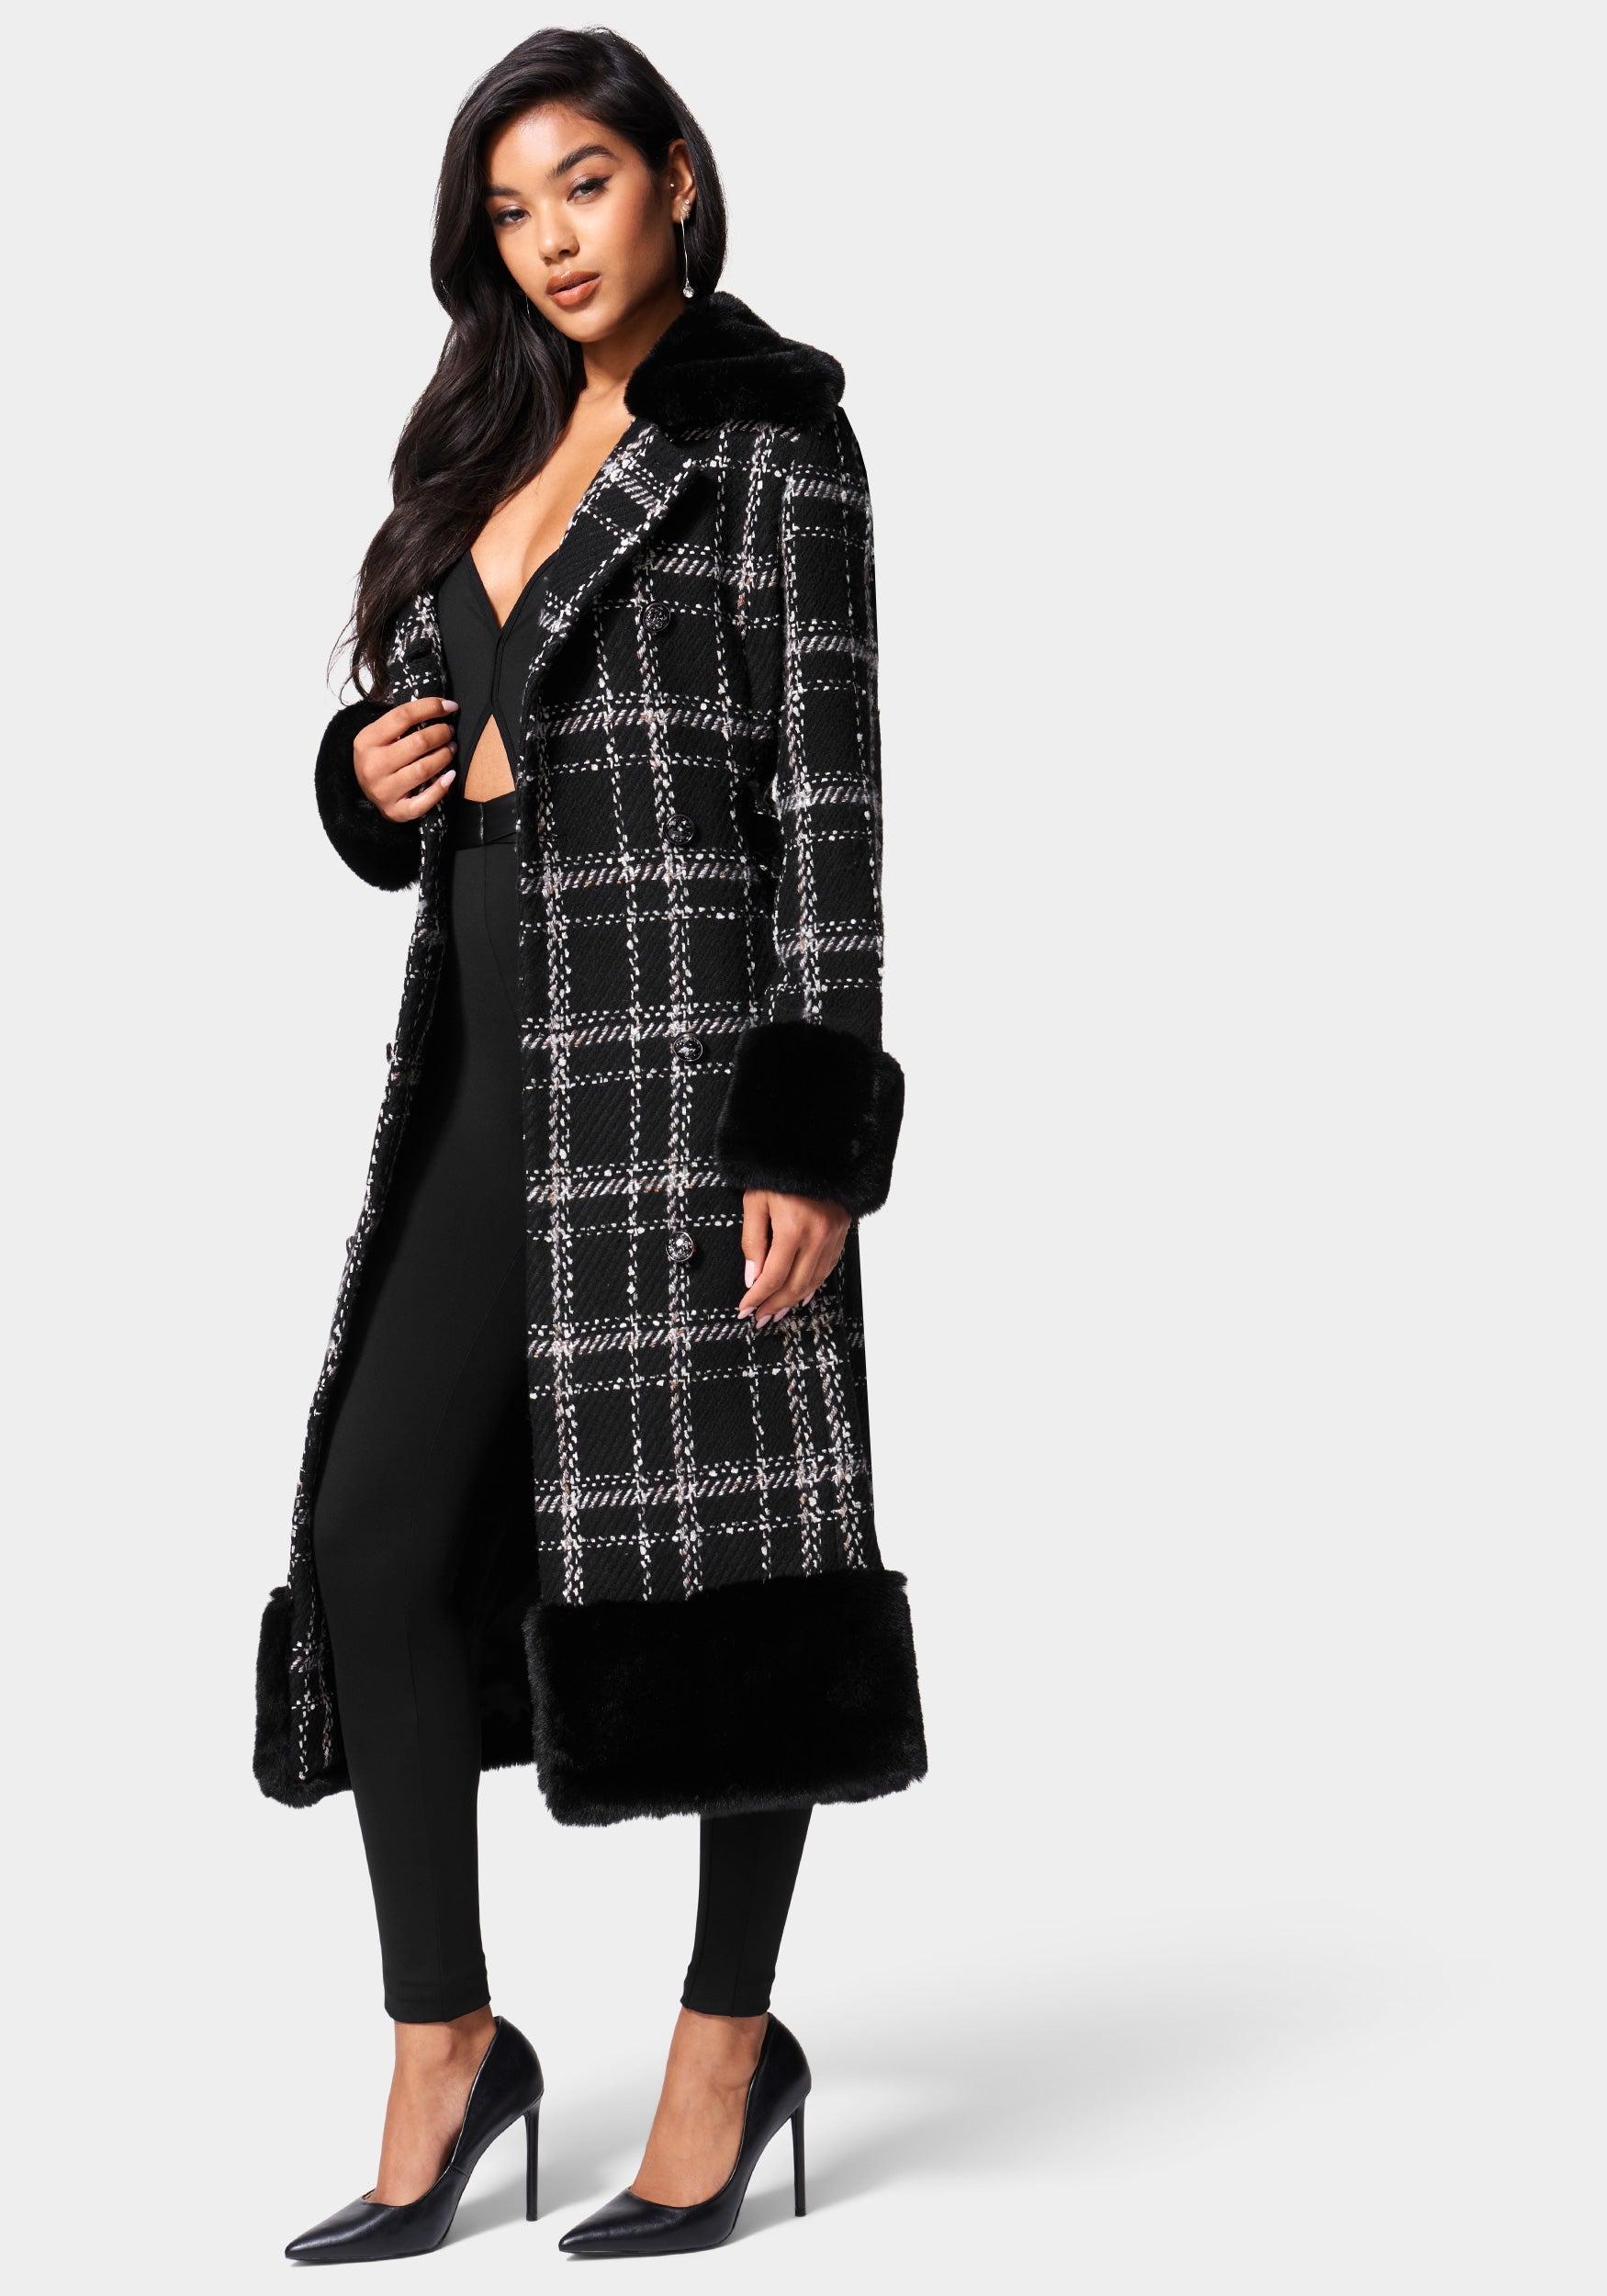 Bebe Wool Blended Fur Trim Double Breasted Coat in Black | Lyst